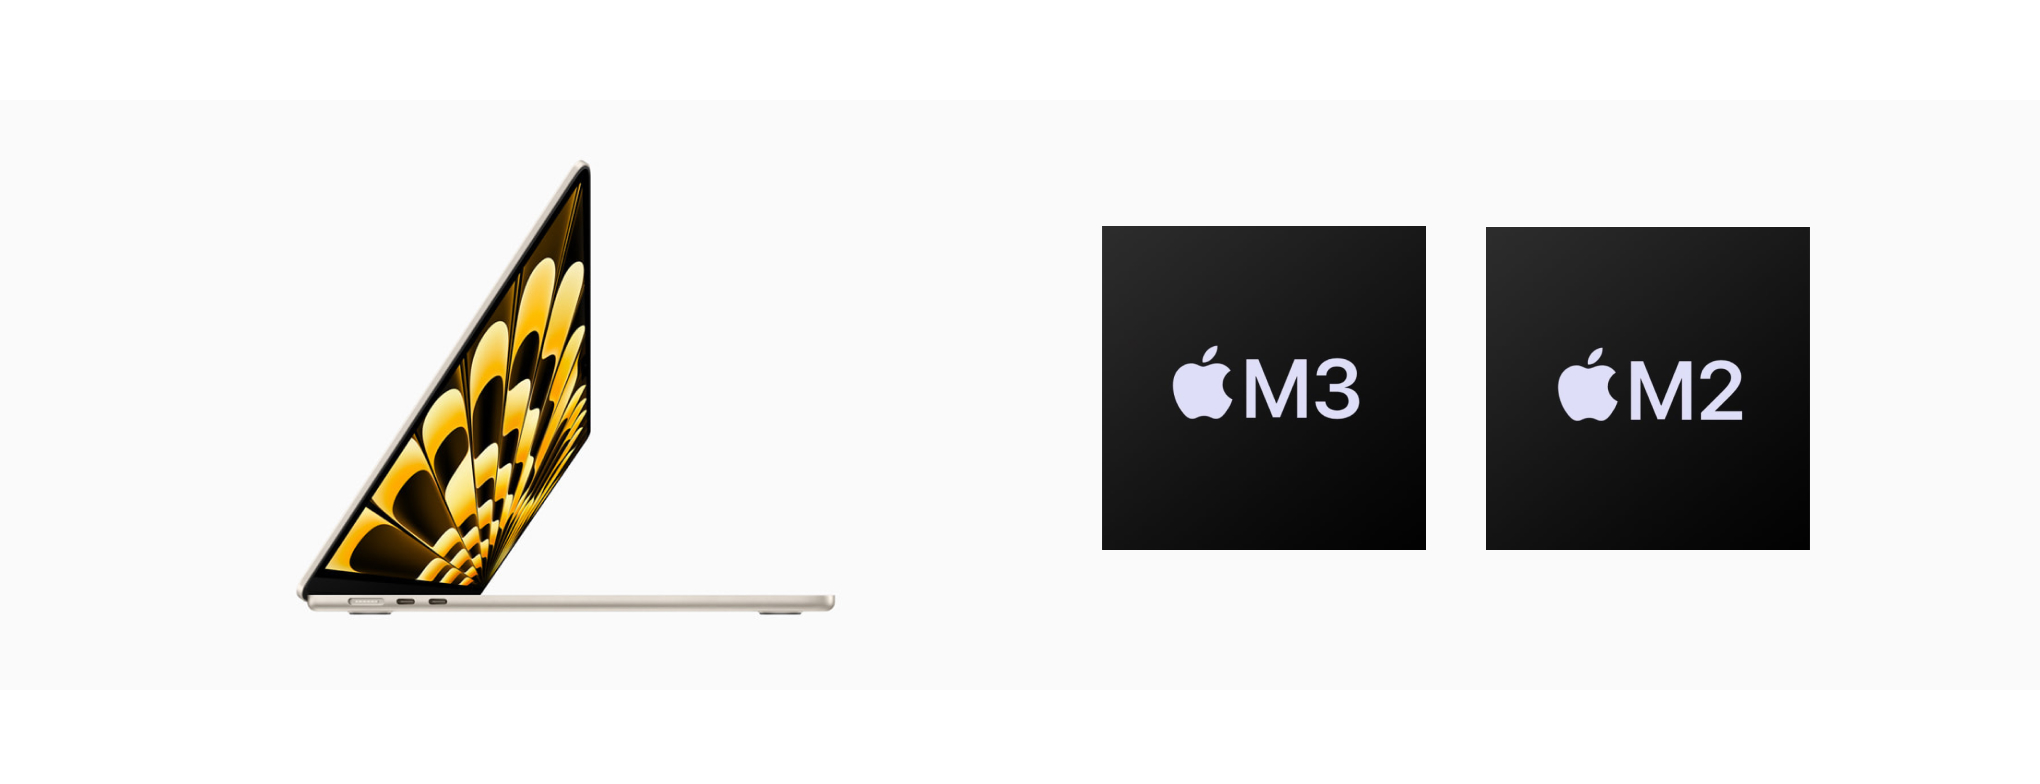 De M2 of M3 MacBook Air 15 inch